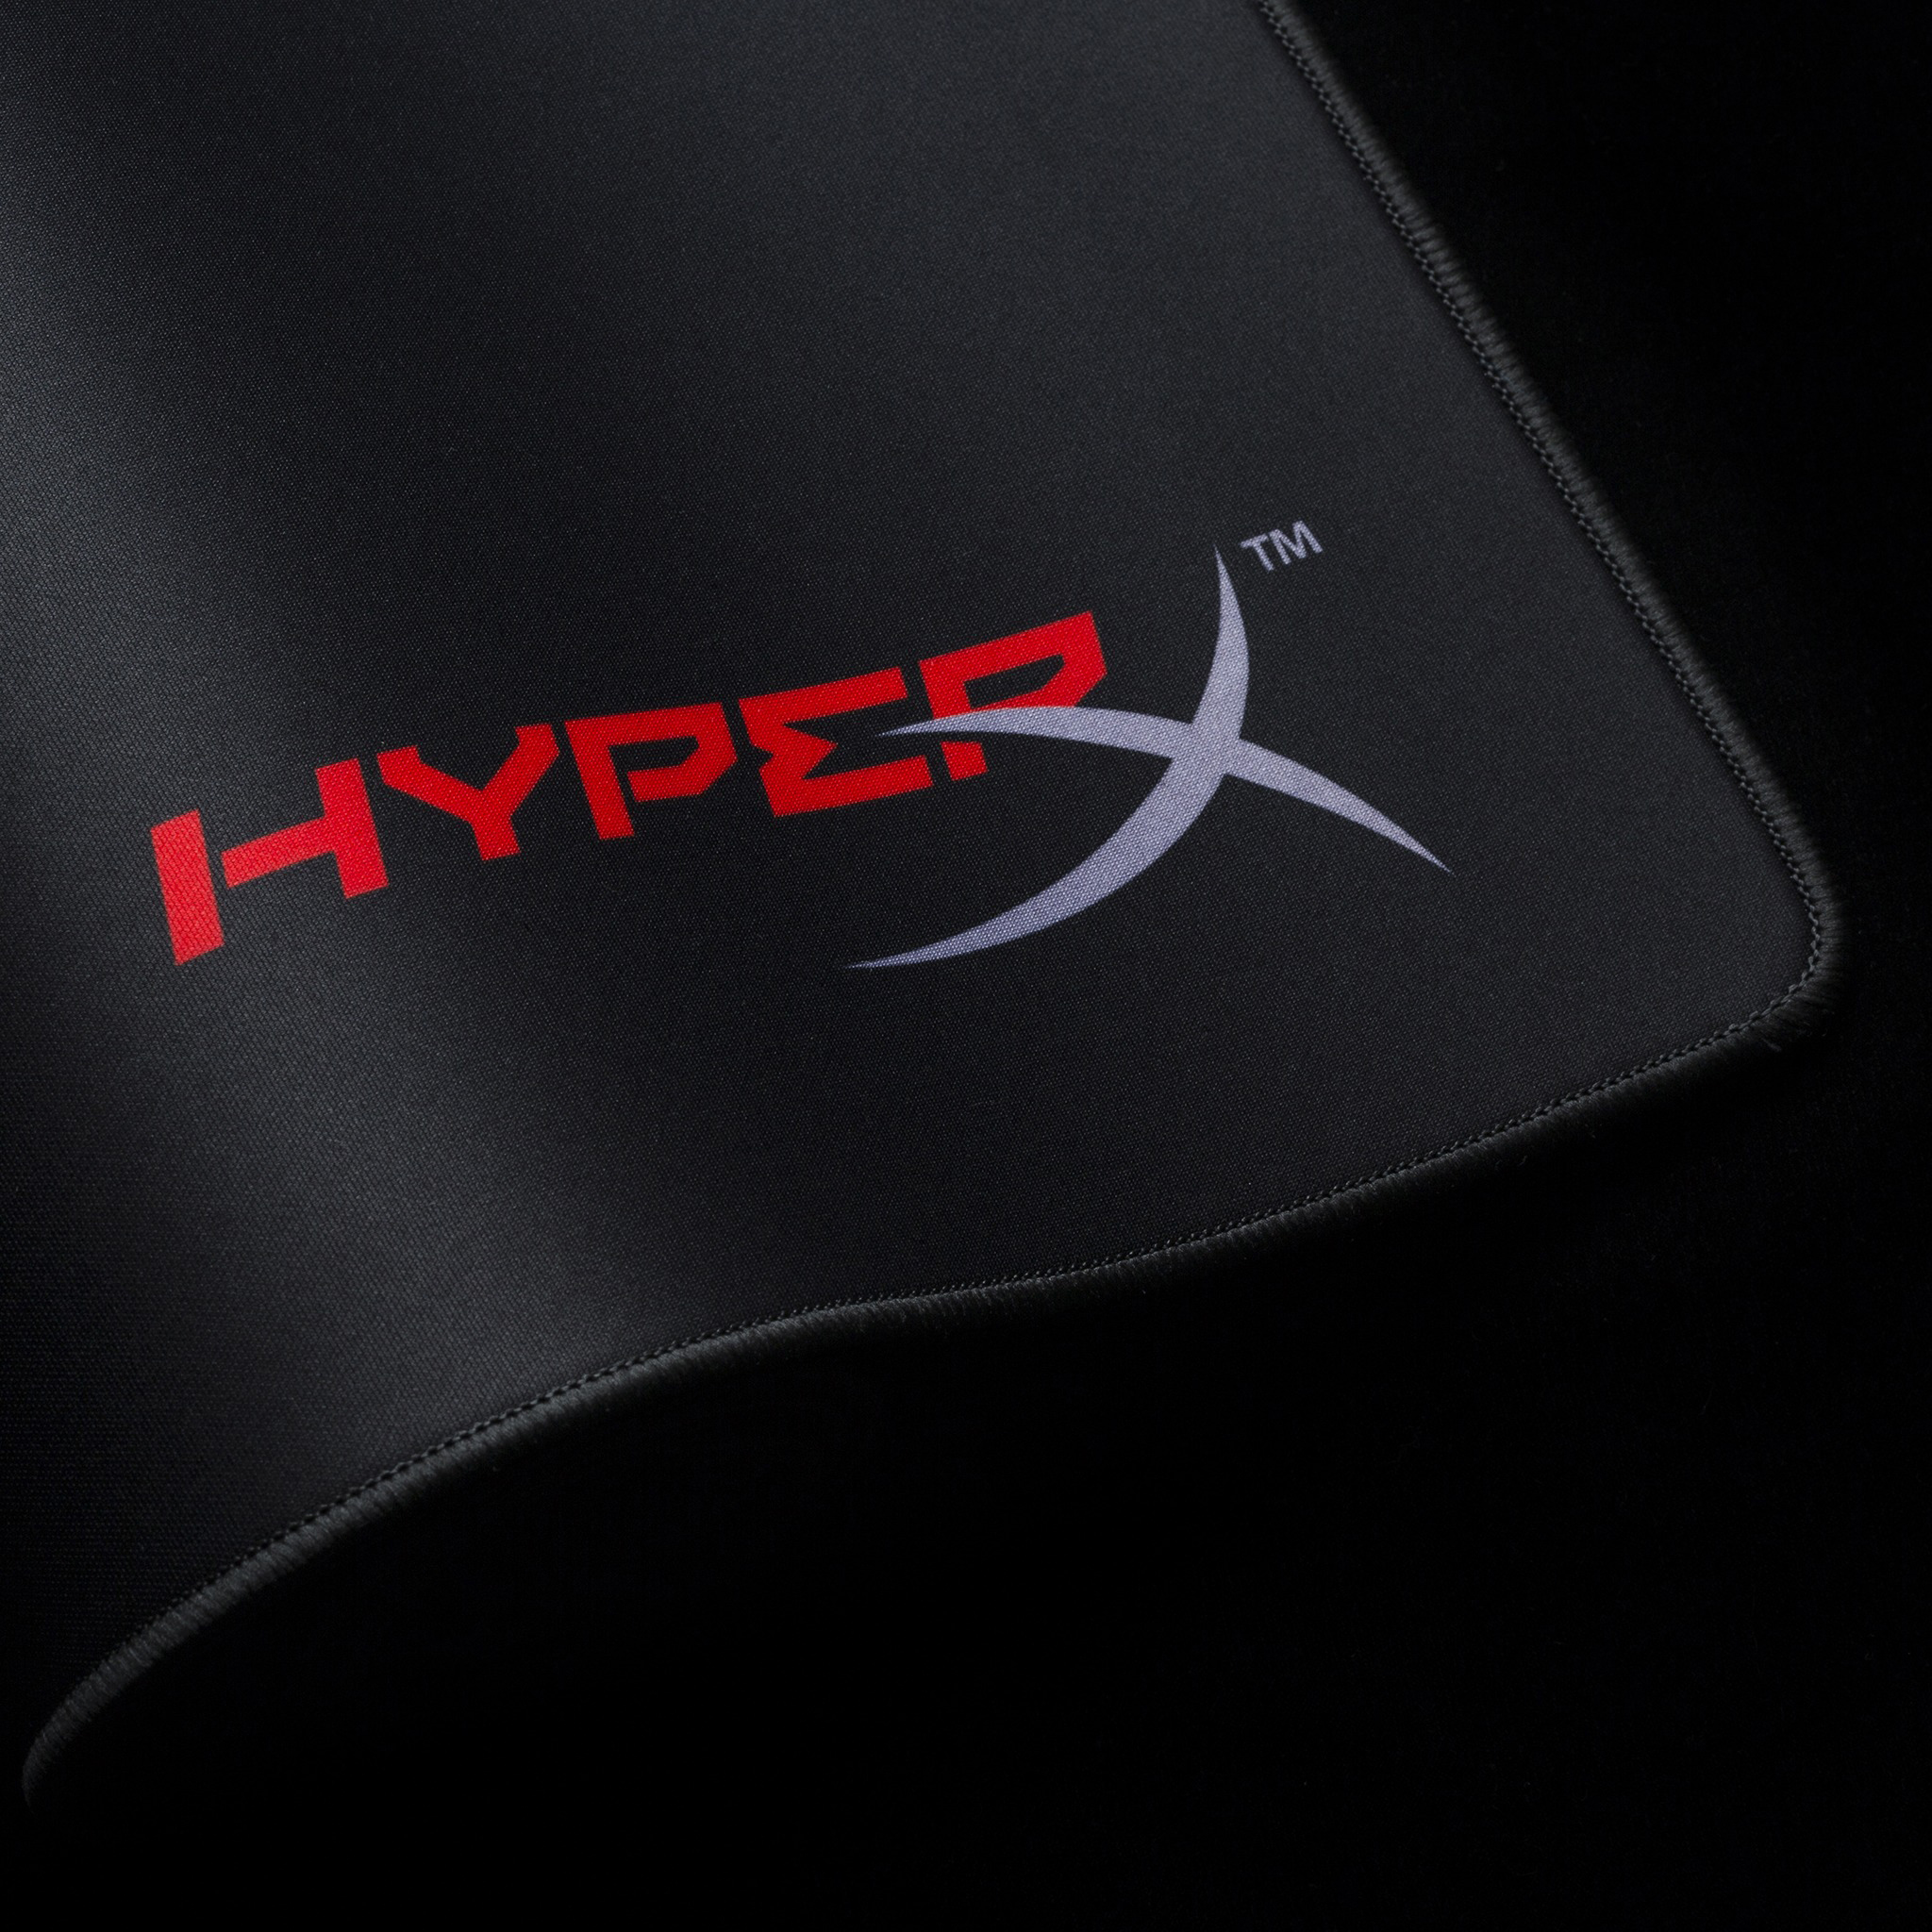 HYPERX FURY S Pro x M Gaming mm (300 mm) Mauspad 360